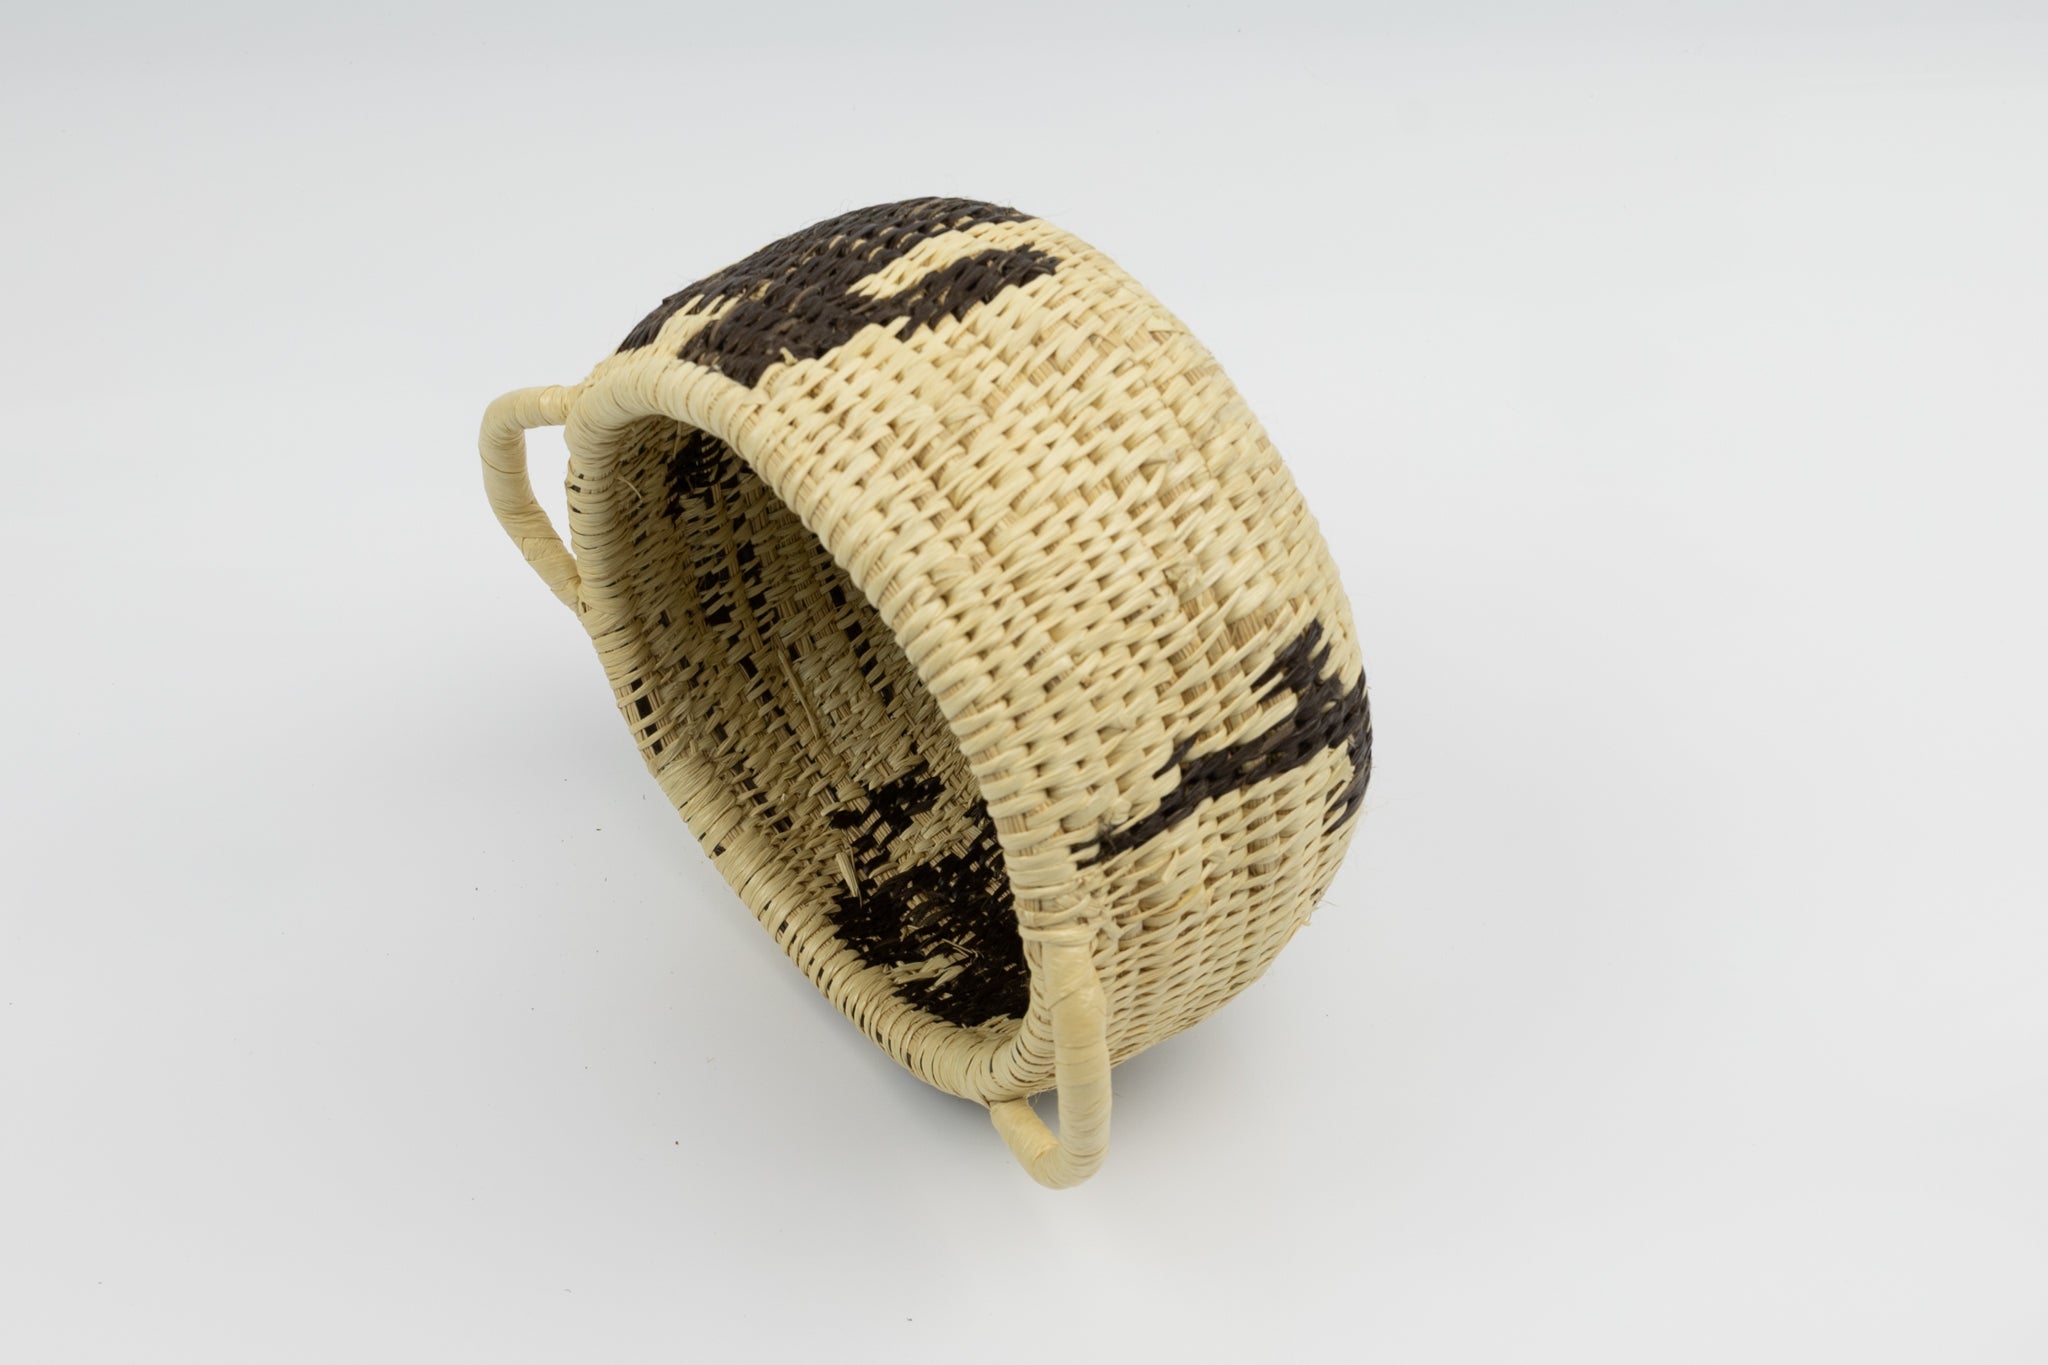 Vintage Handmade Human Figure Woven Basket With Handles Fair Trade